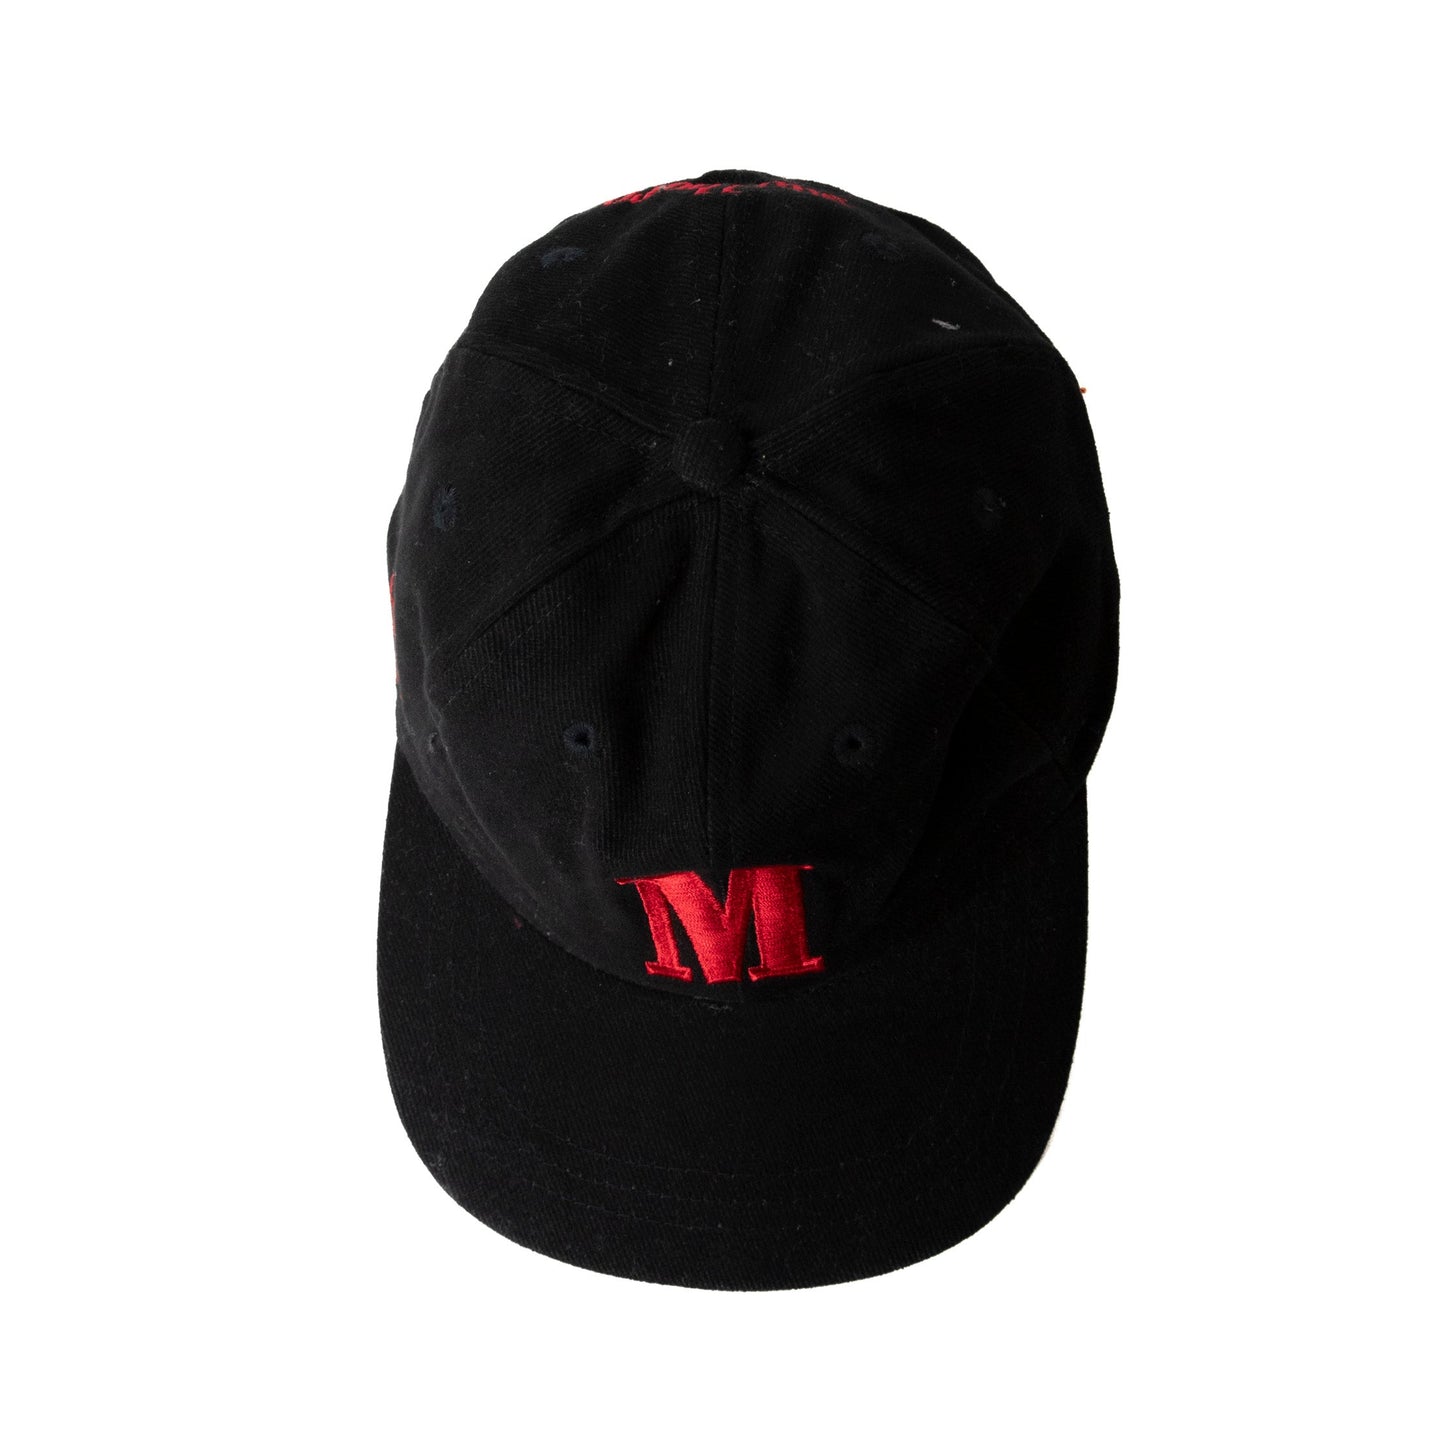 Marlboro Black Embroidered Cap